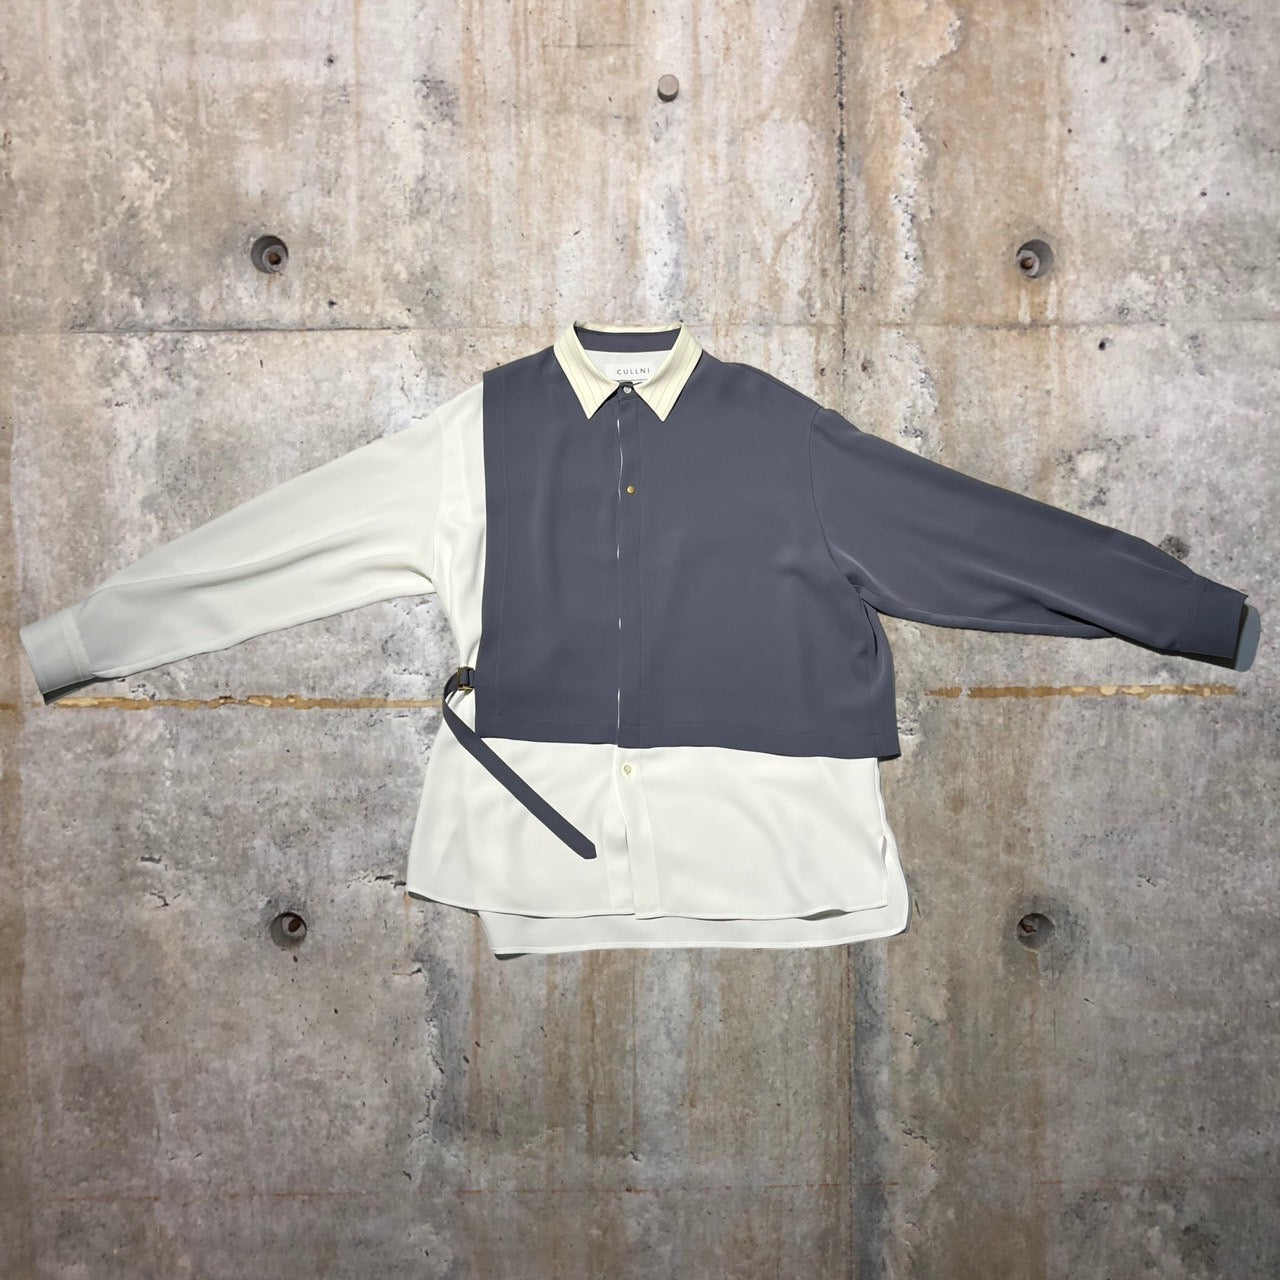 CULLNI(クルニ) 22SSコンビネーションシャツ/ドッキングシャツ 22-SS-005 2(Mサイズ程度) グレー×ホワイト